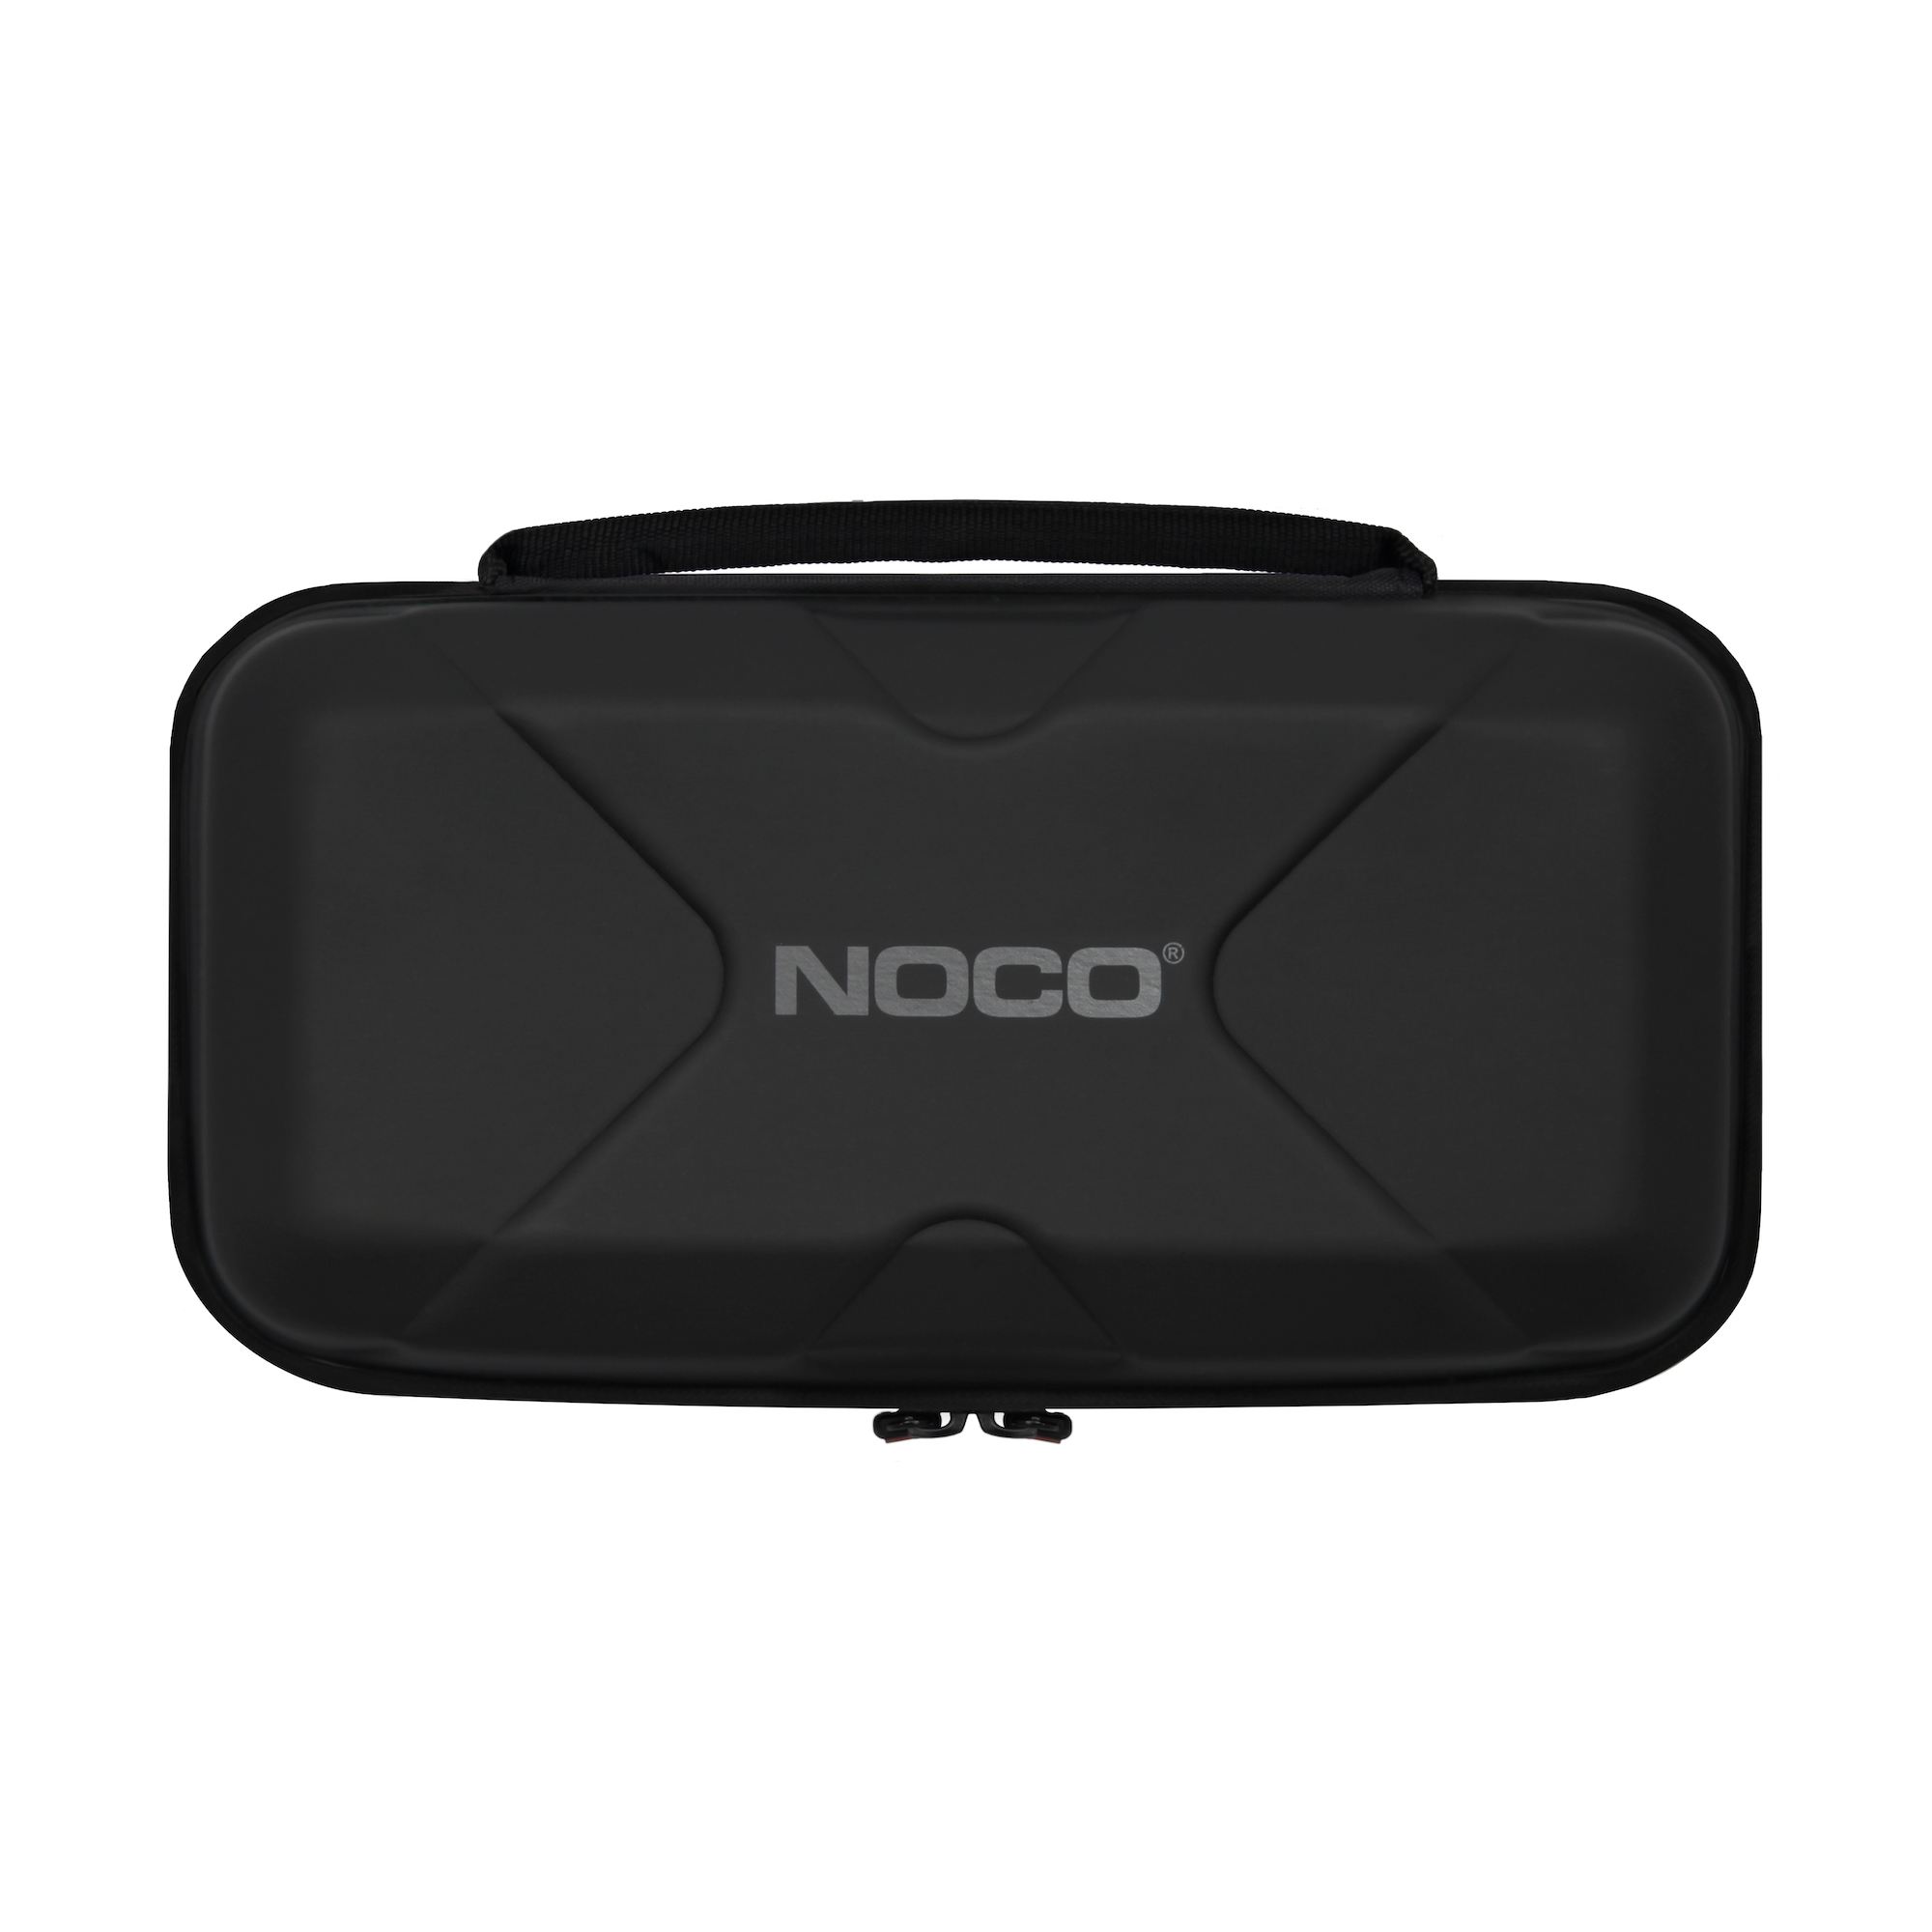 NOCO Plus Jump Starter Case